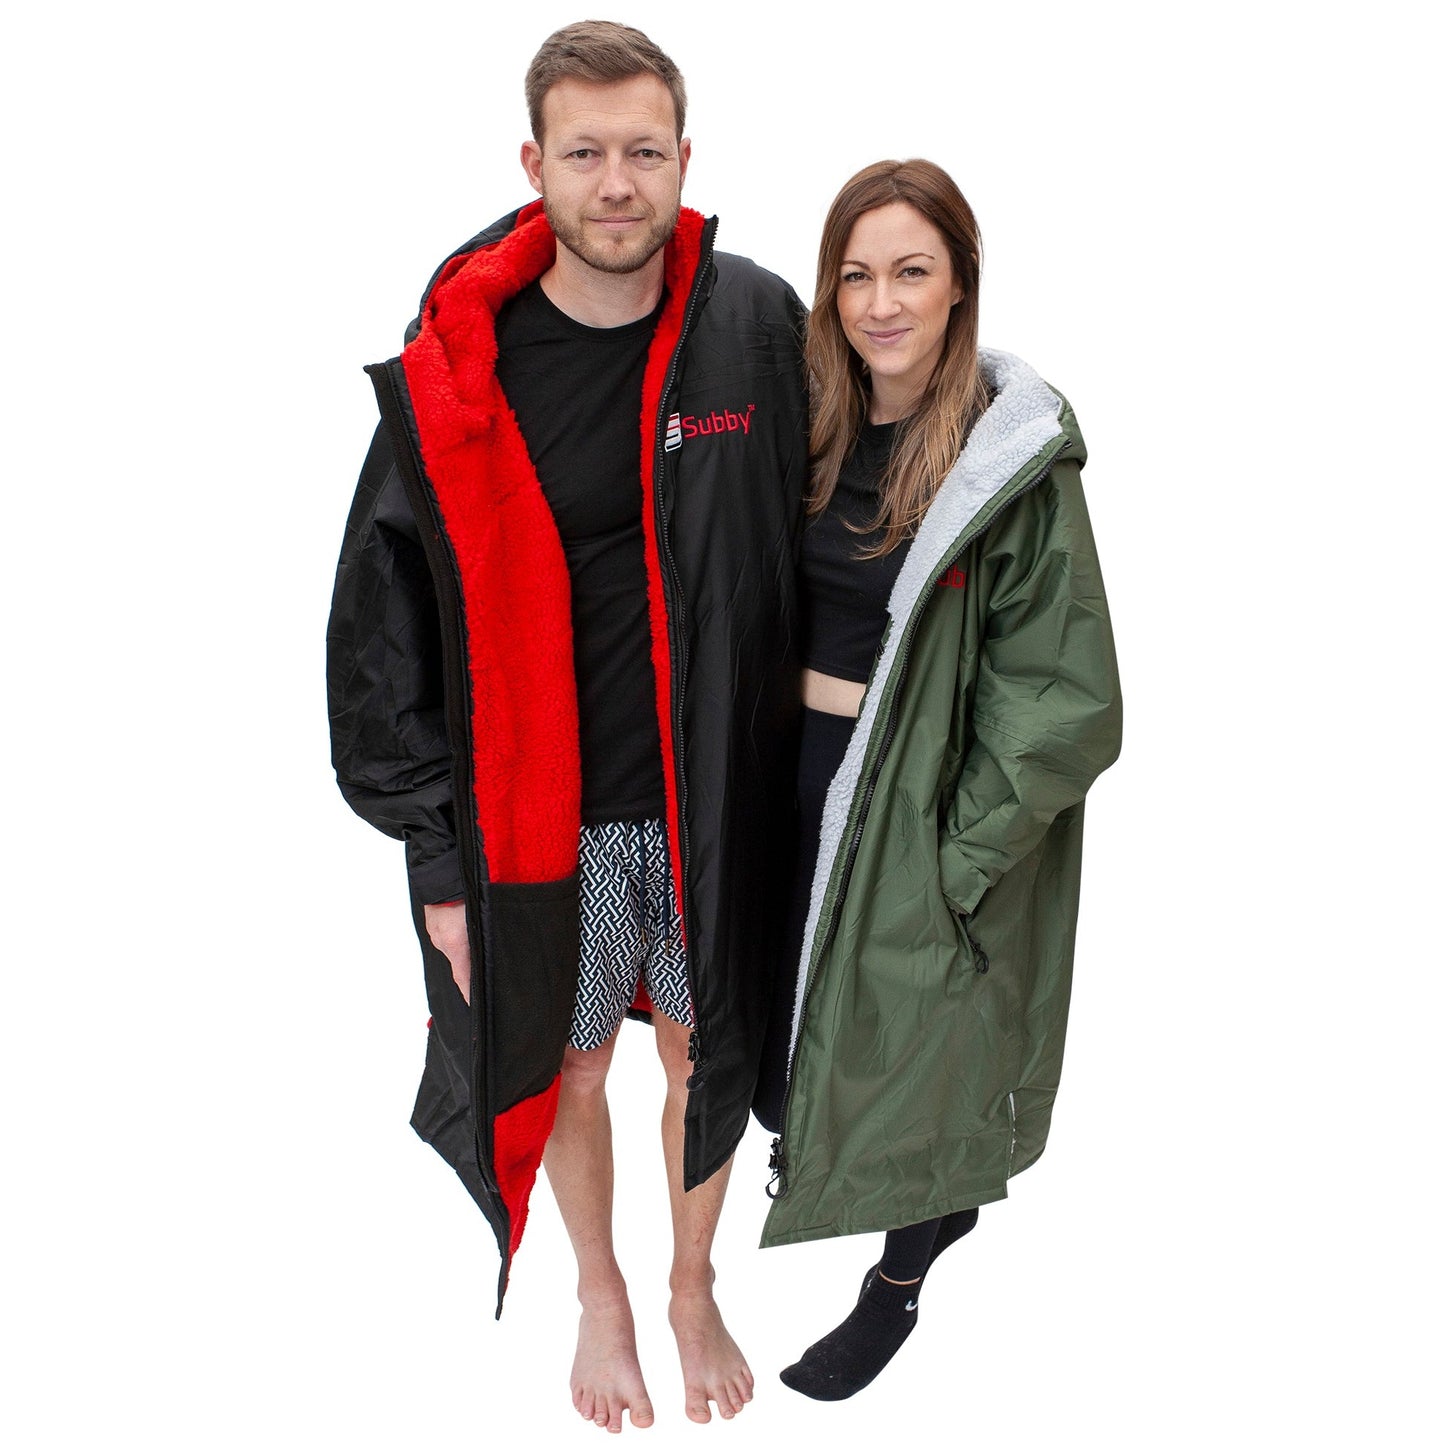 Long sleeve Subby change robe - Black/Red Fleece (Large)